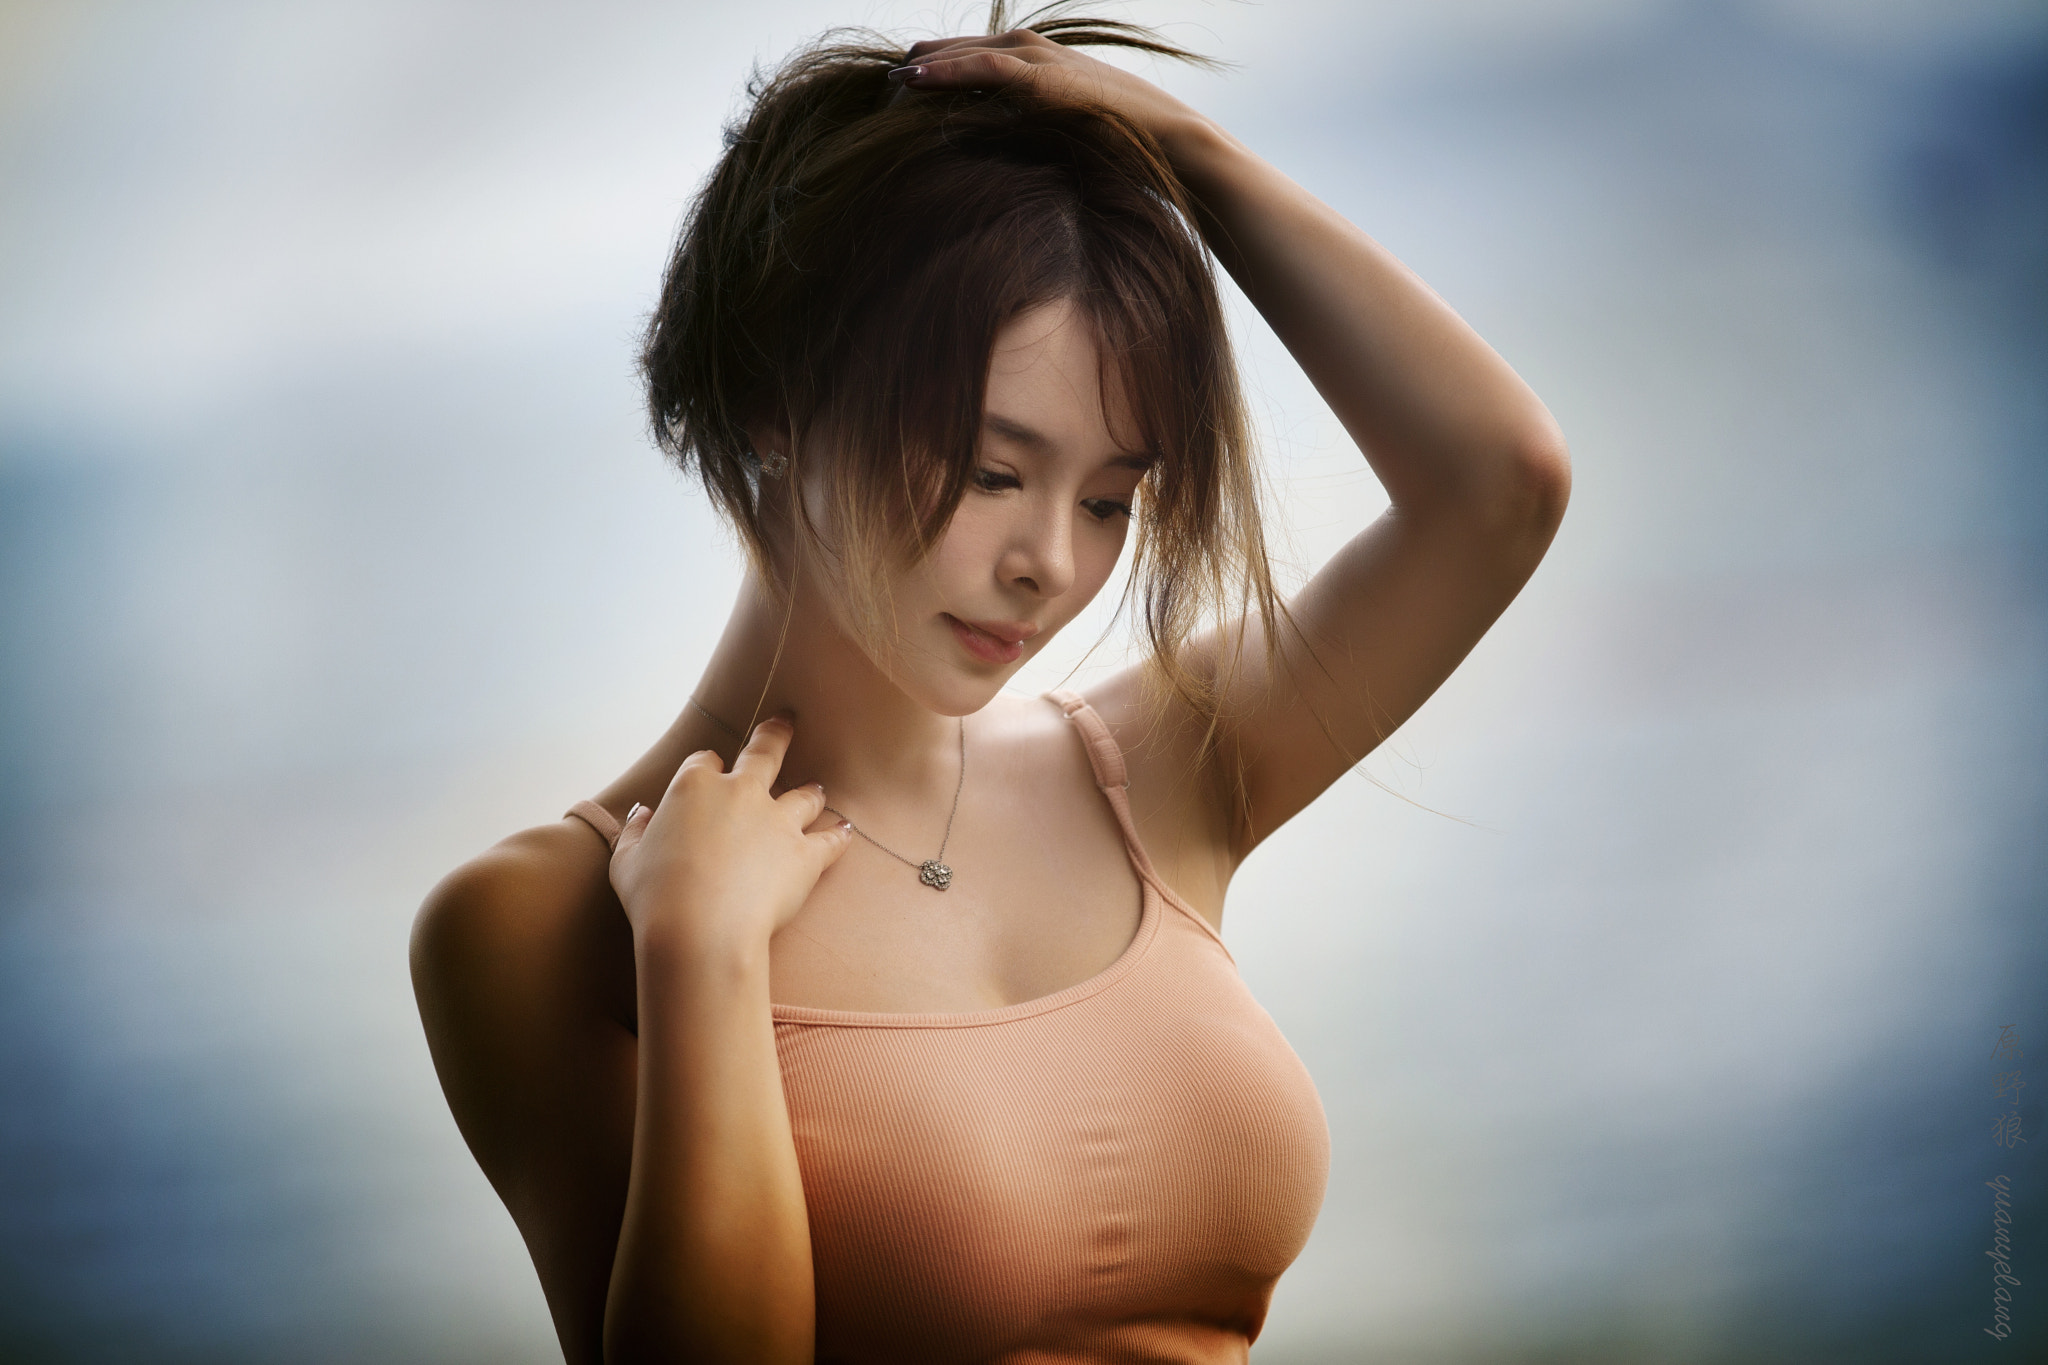 Yuan Yelang Women Asian Brunette Holding Hair Looking Below Tank Top Necklace Pink Clothing Simple B 2048x1365